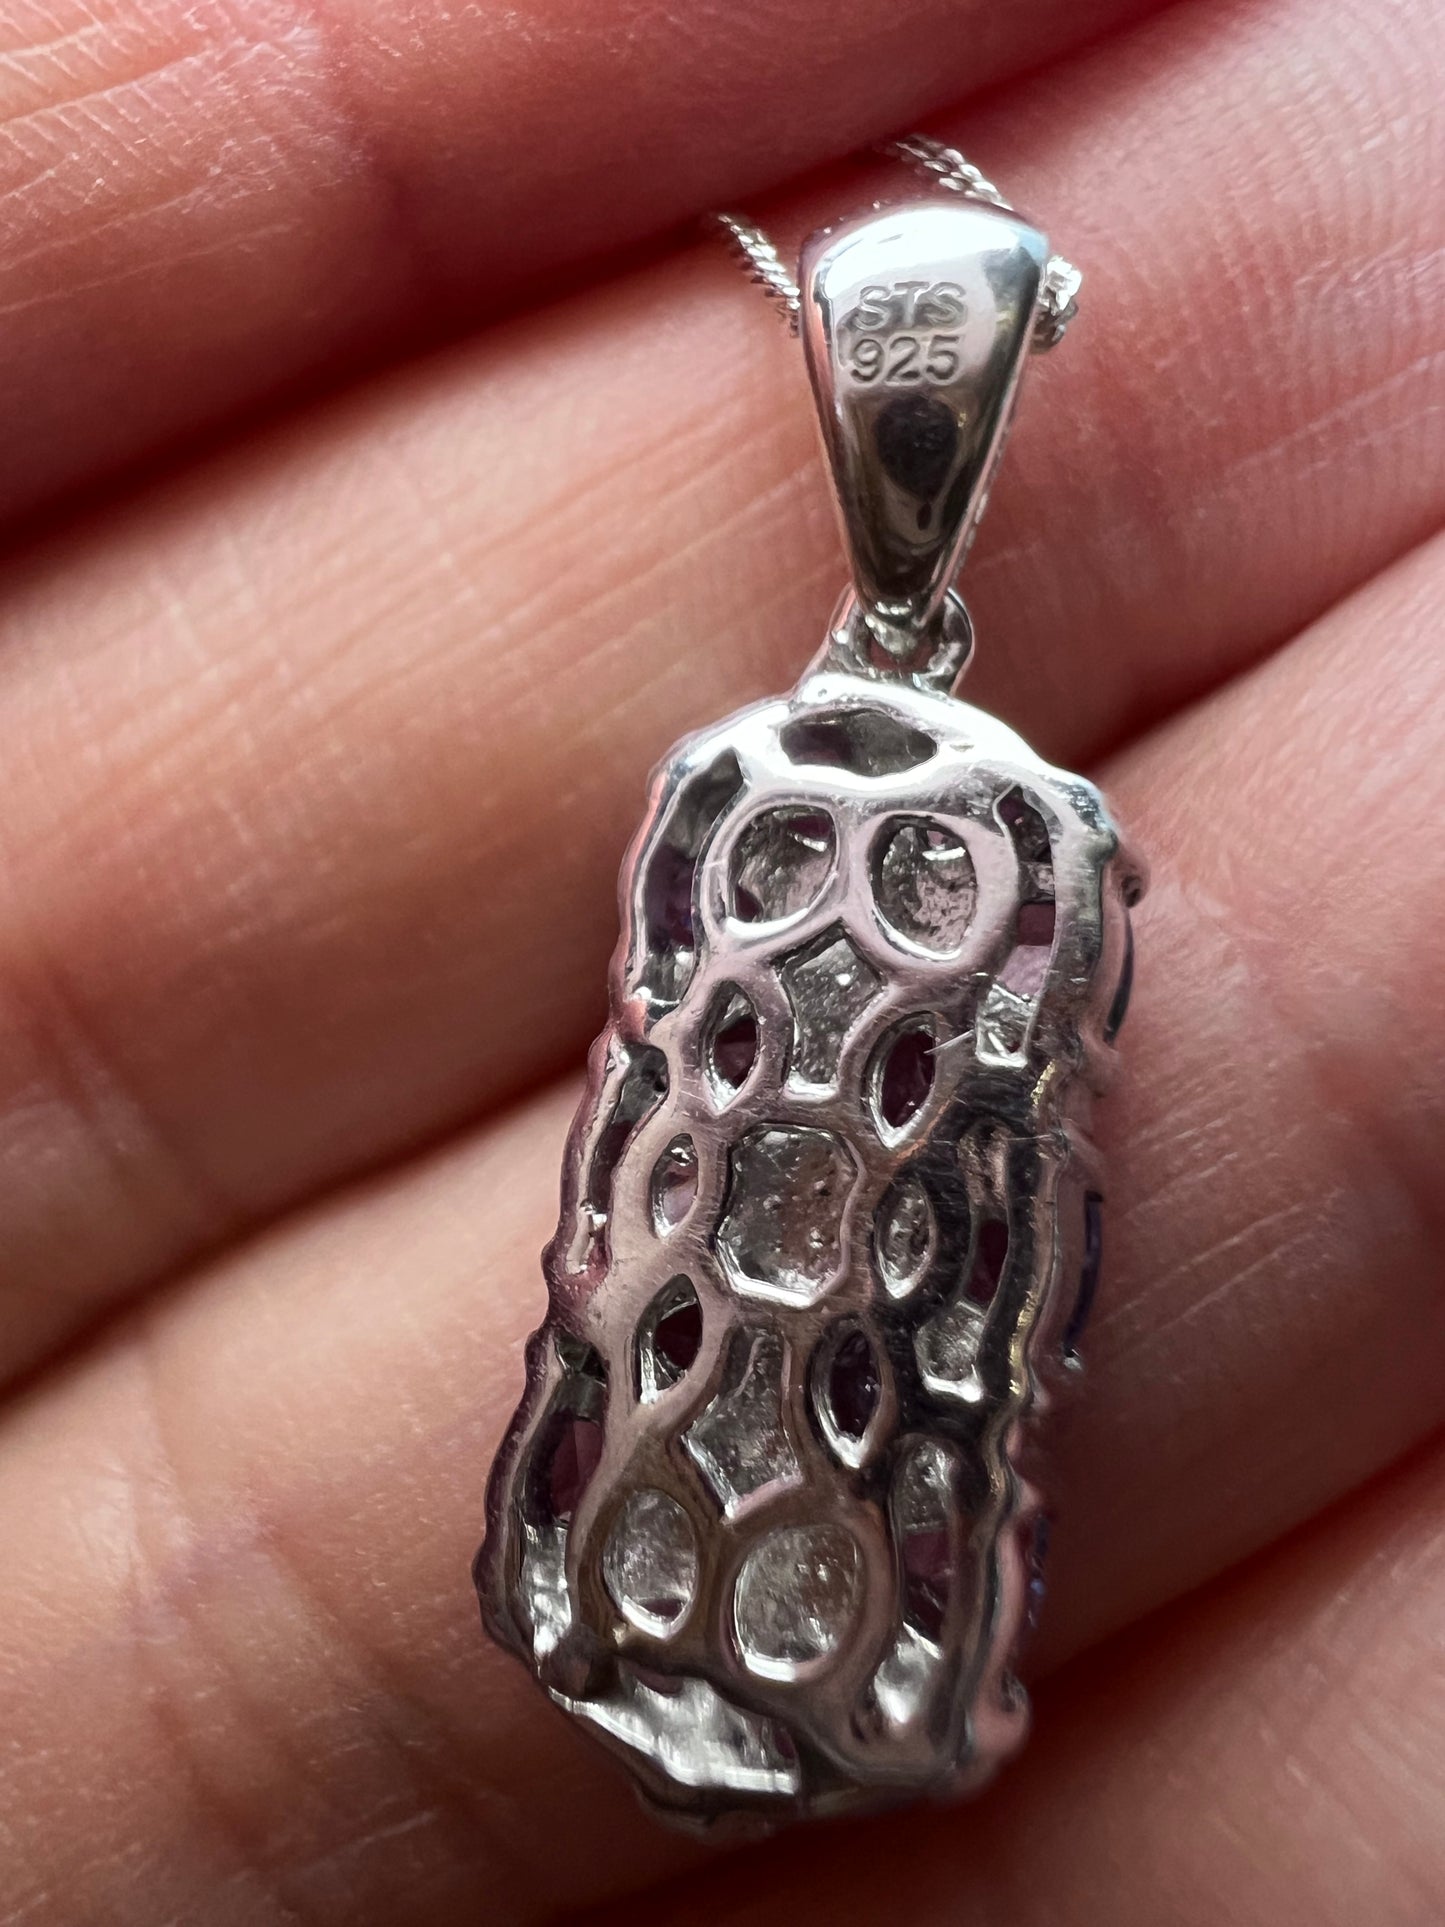 *NEW* Tanzanite CZ sterling silver pendant necklace